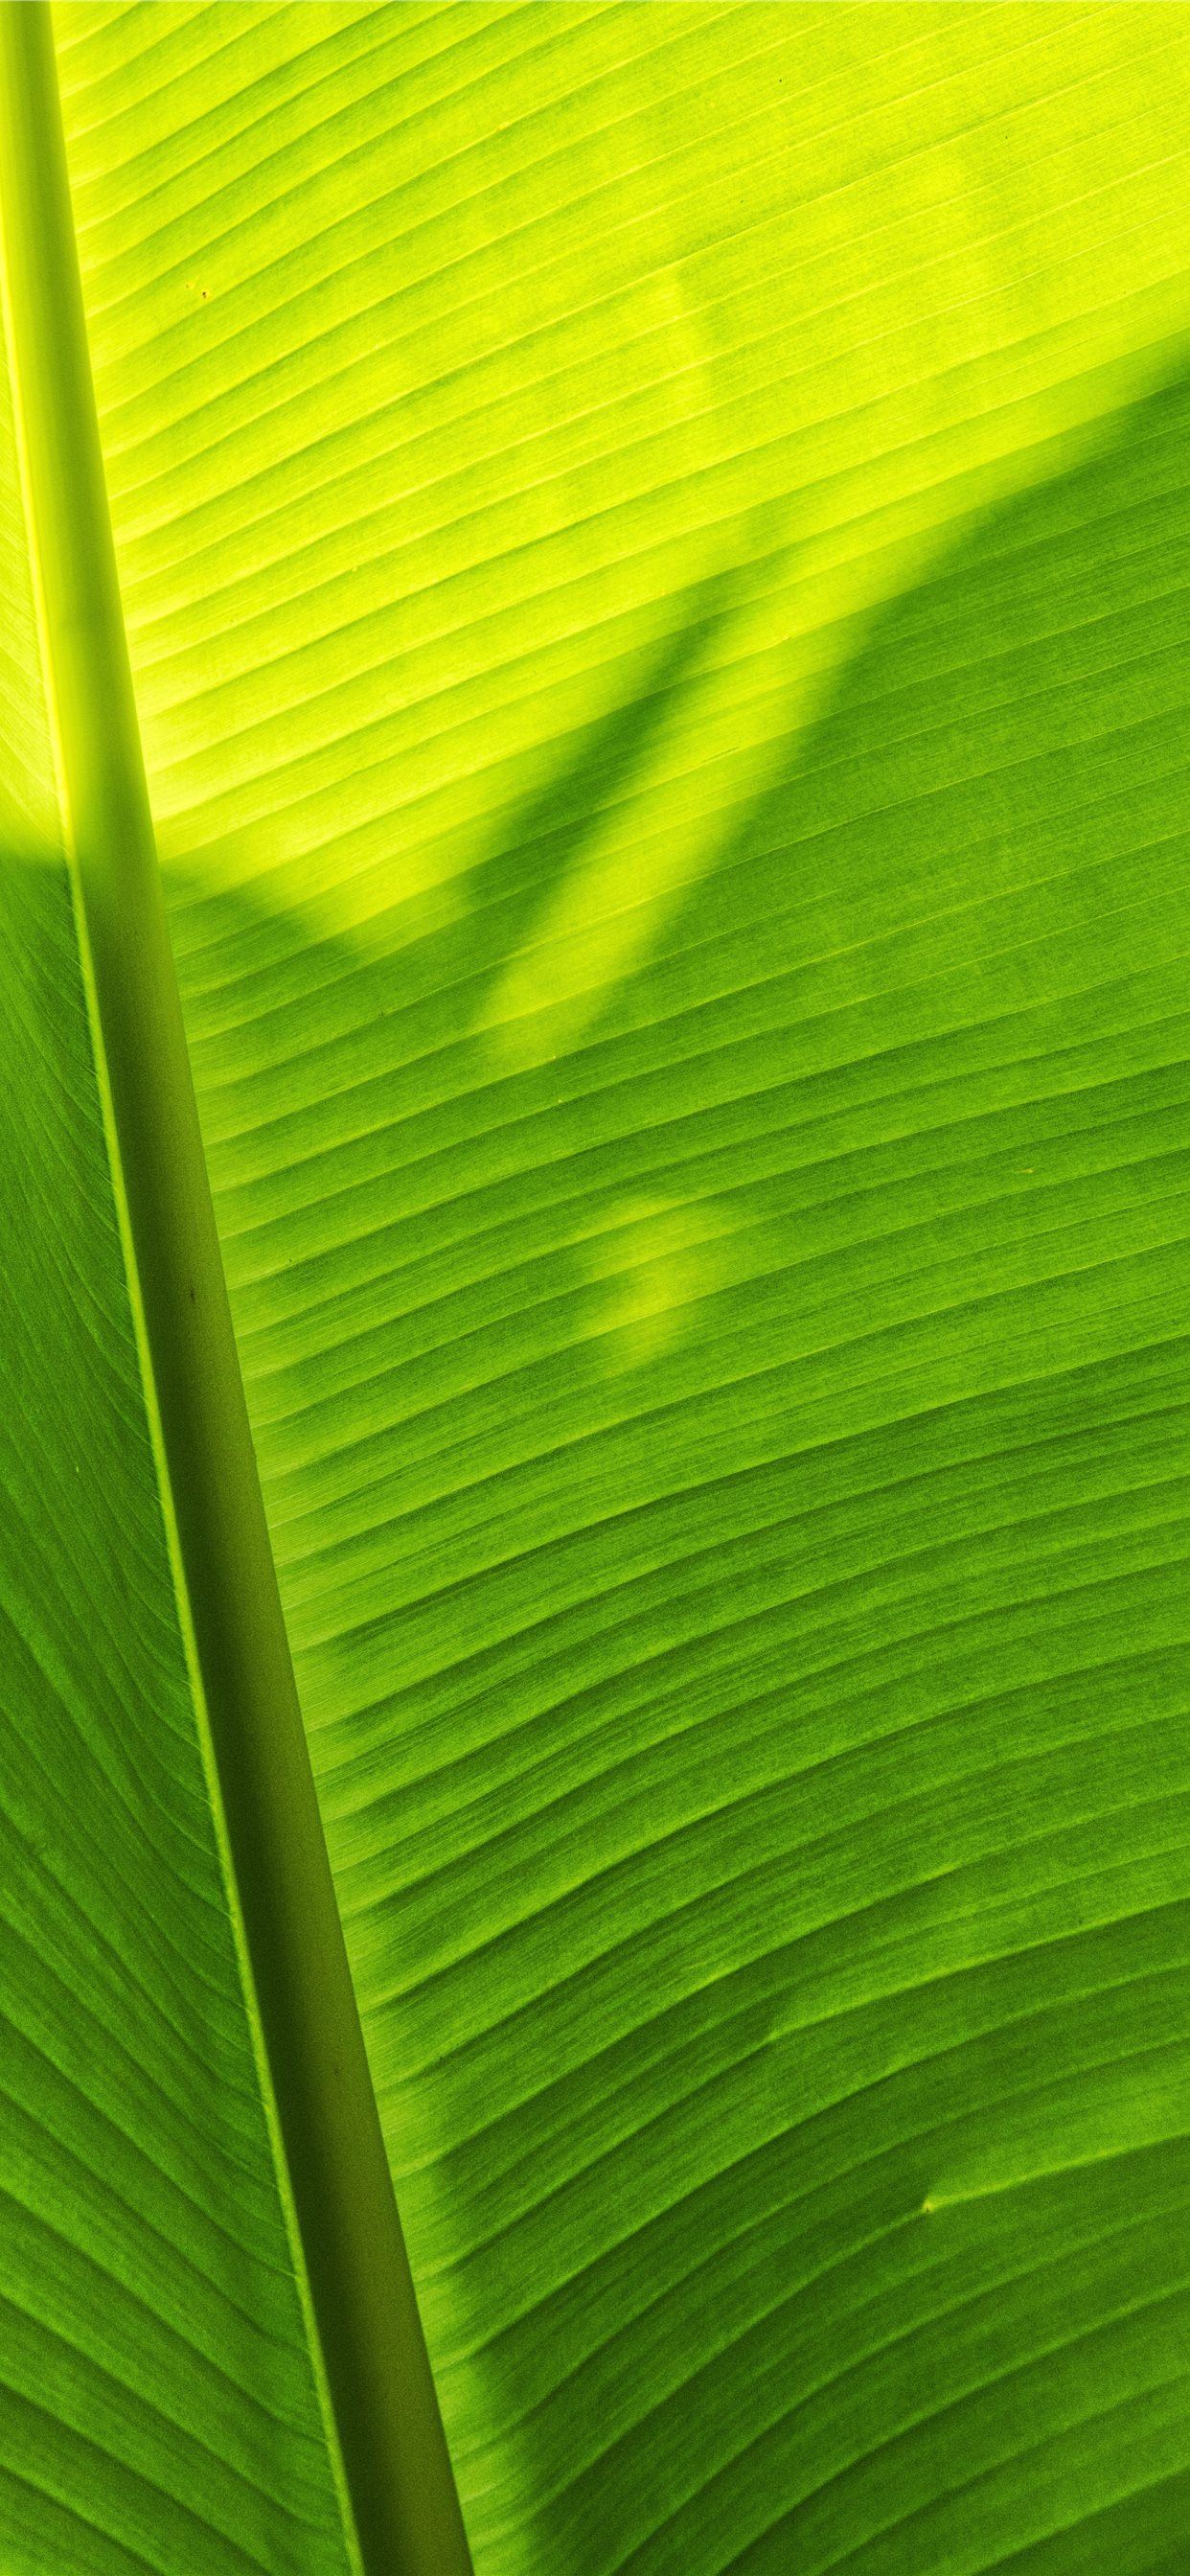 green banana leaf iPhone 11 Wallpaper Free Download